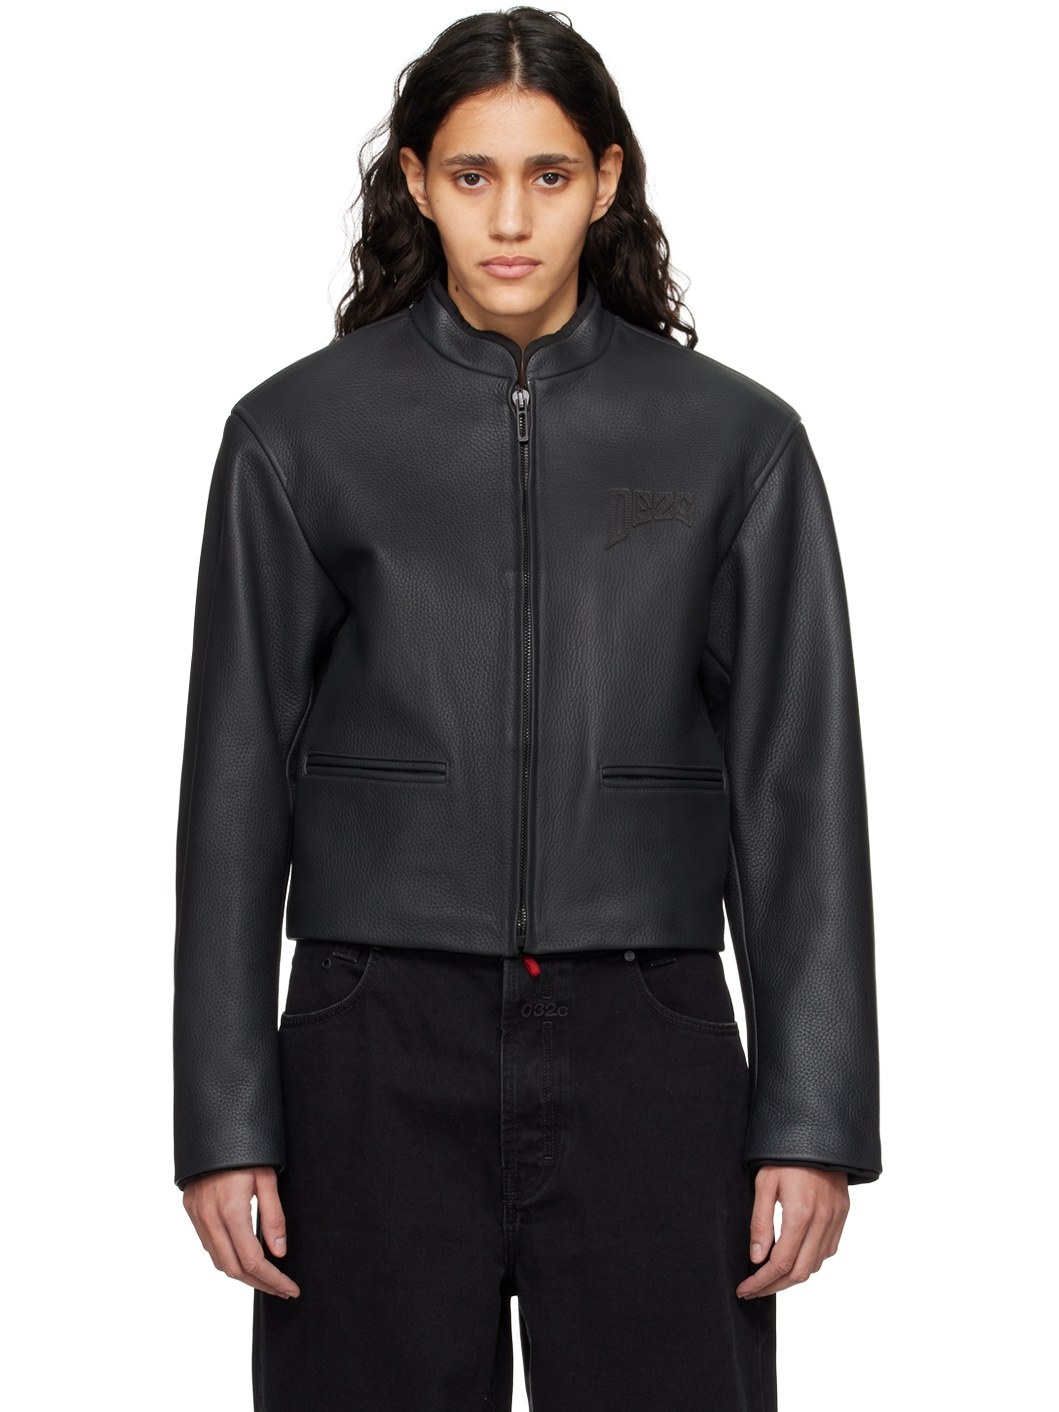 Black Attrition Leather Jacket - 1